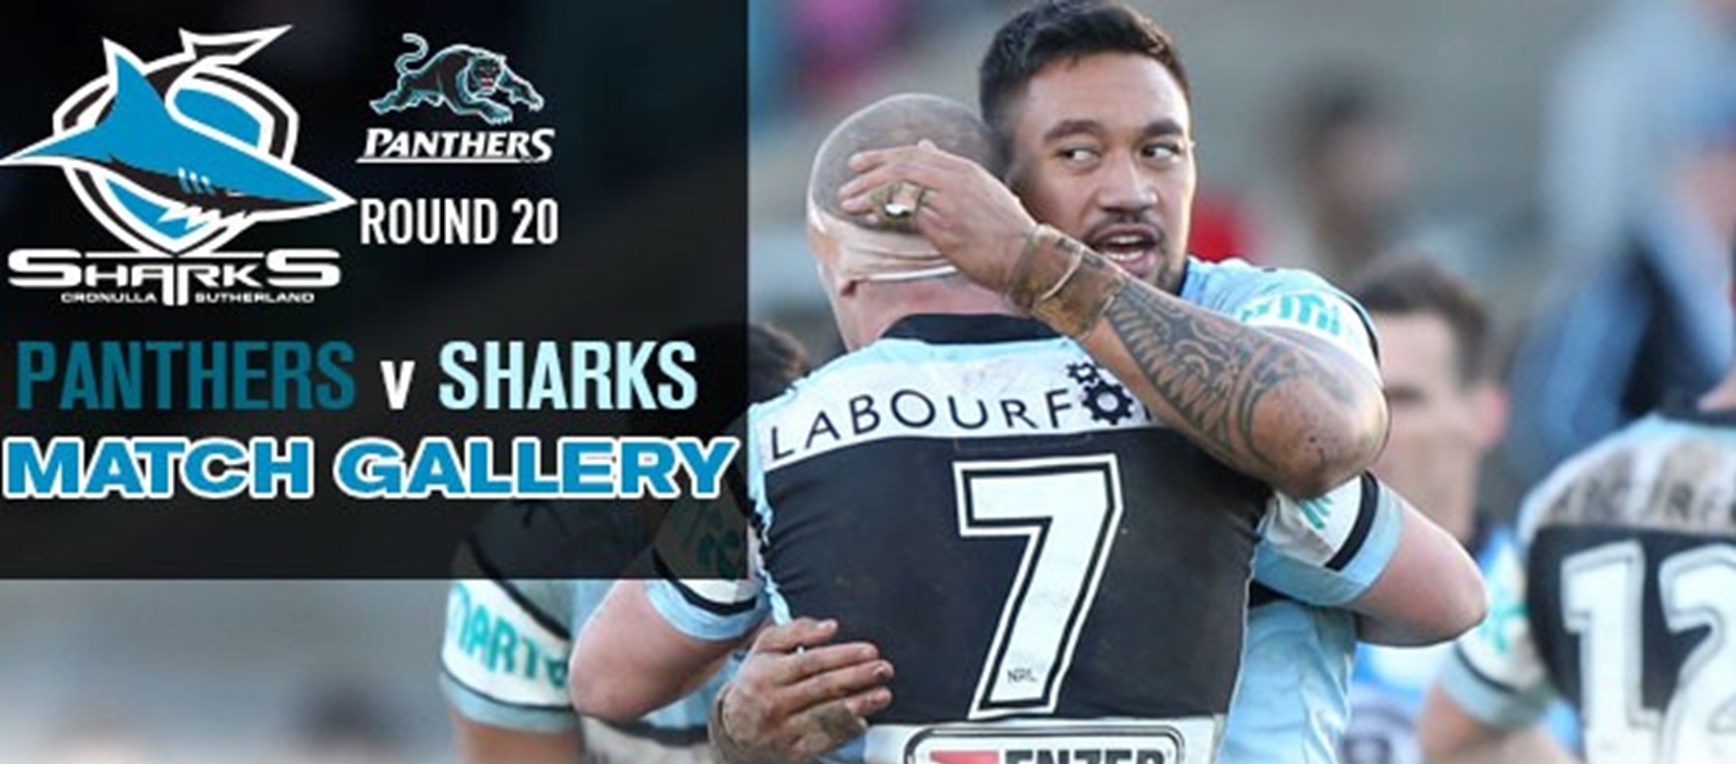 Match Gallery - Panthers v Sharks